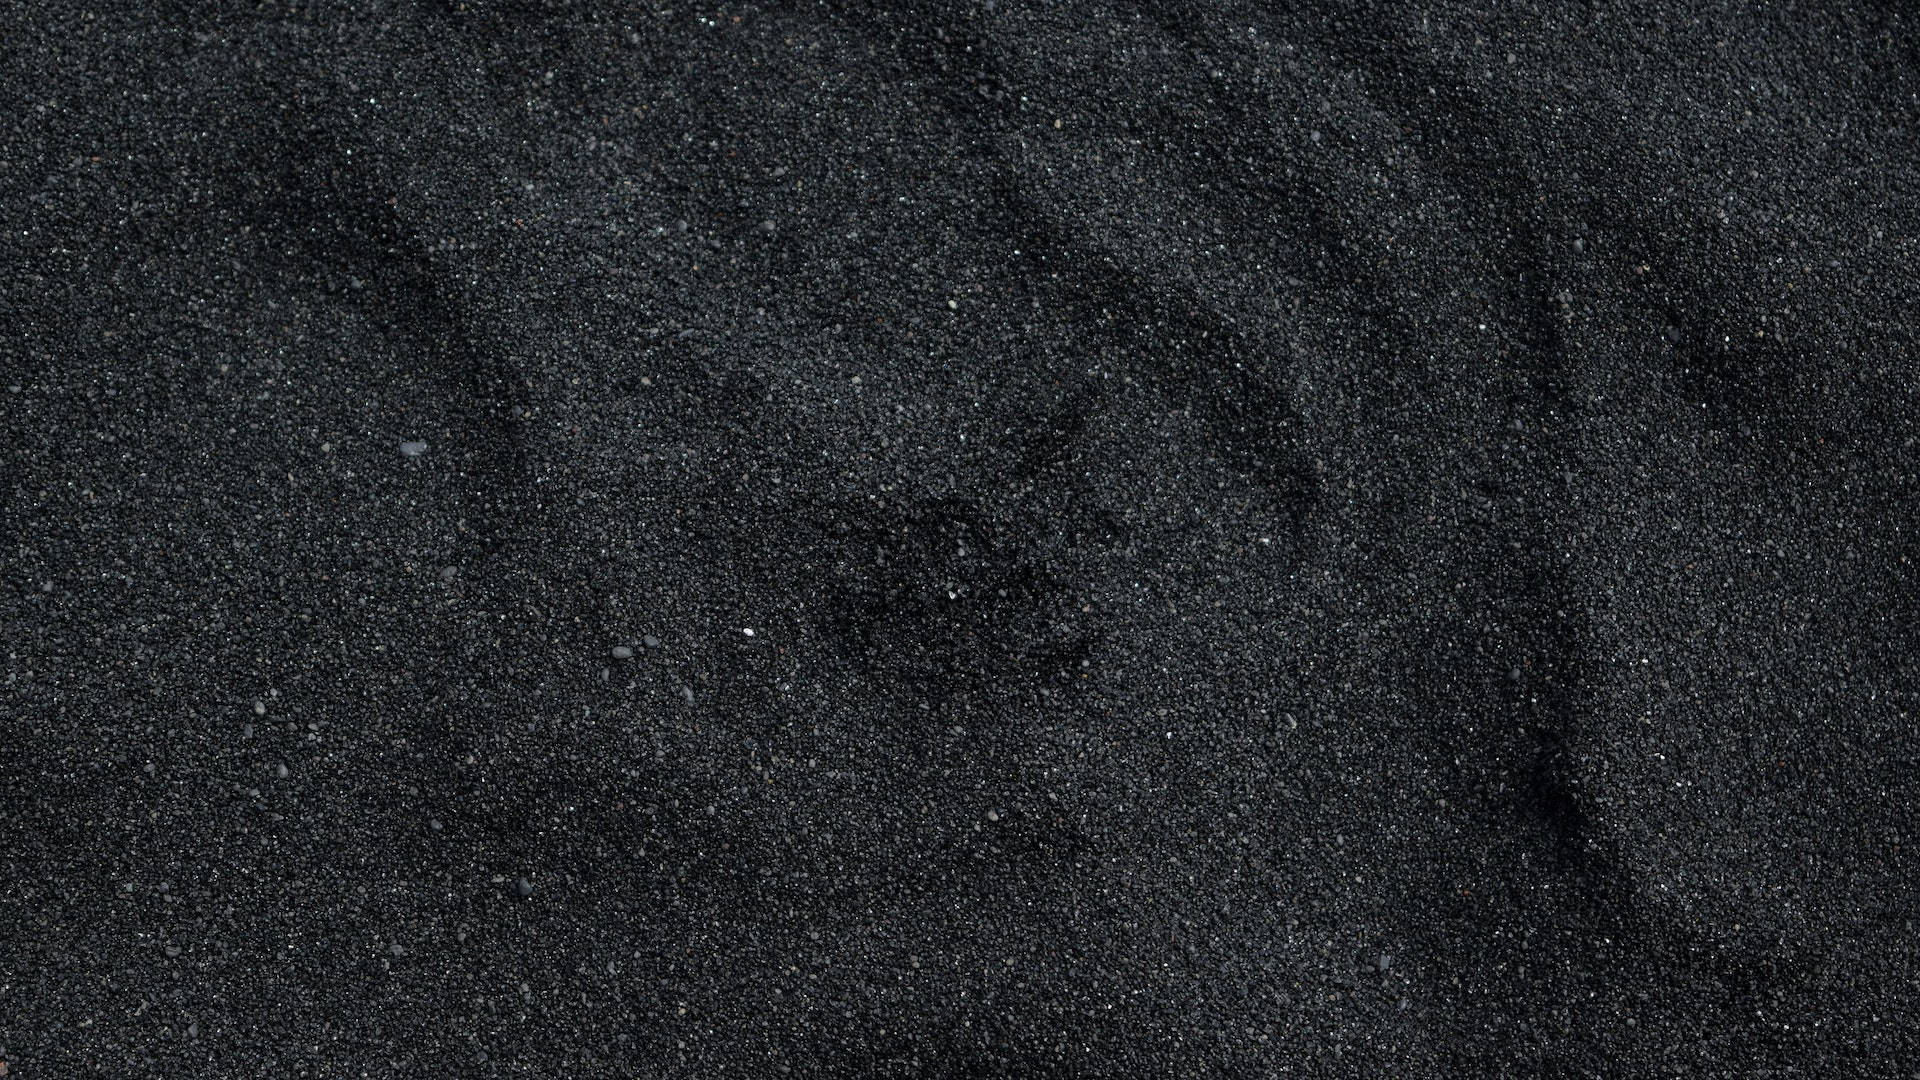 Black Desktop Grain Of Sand